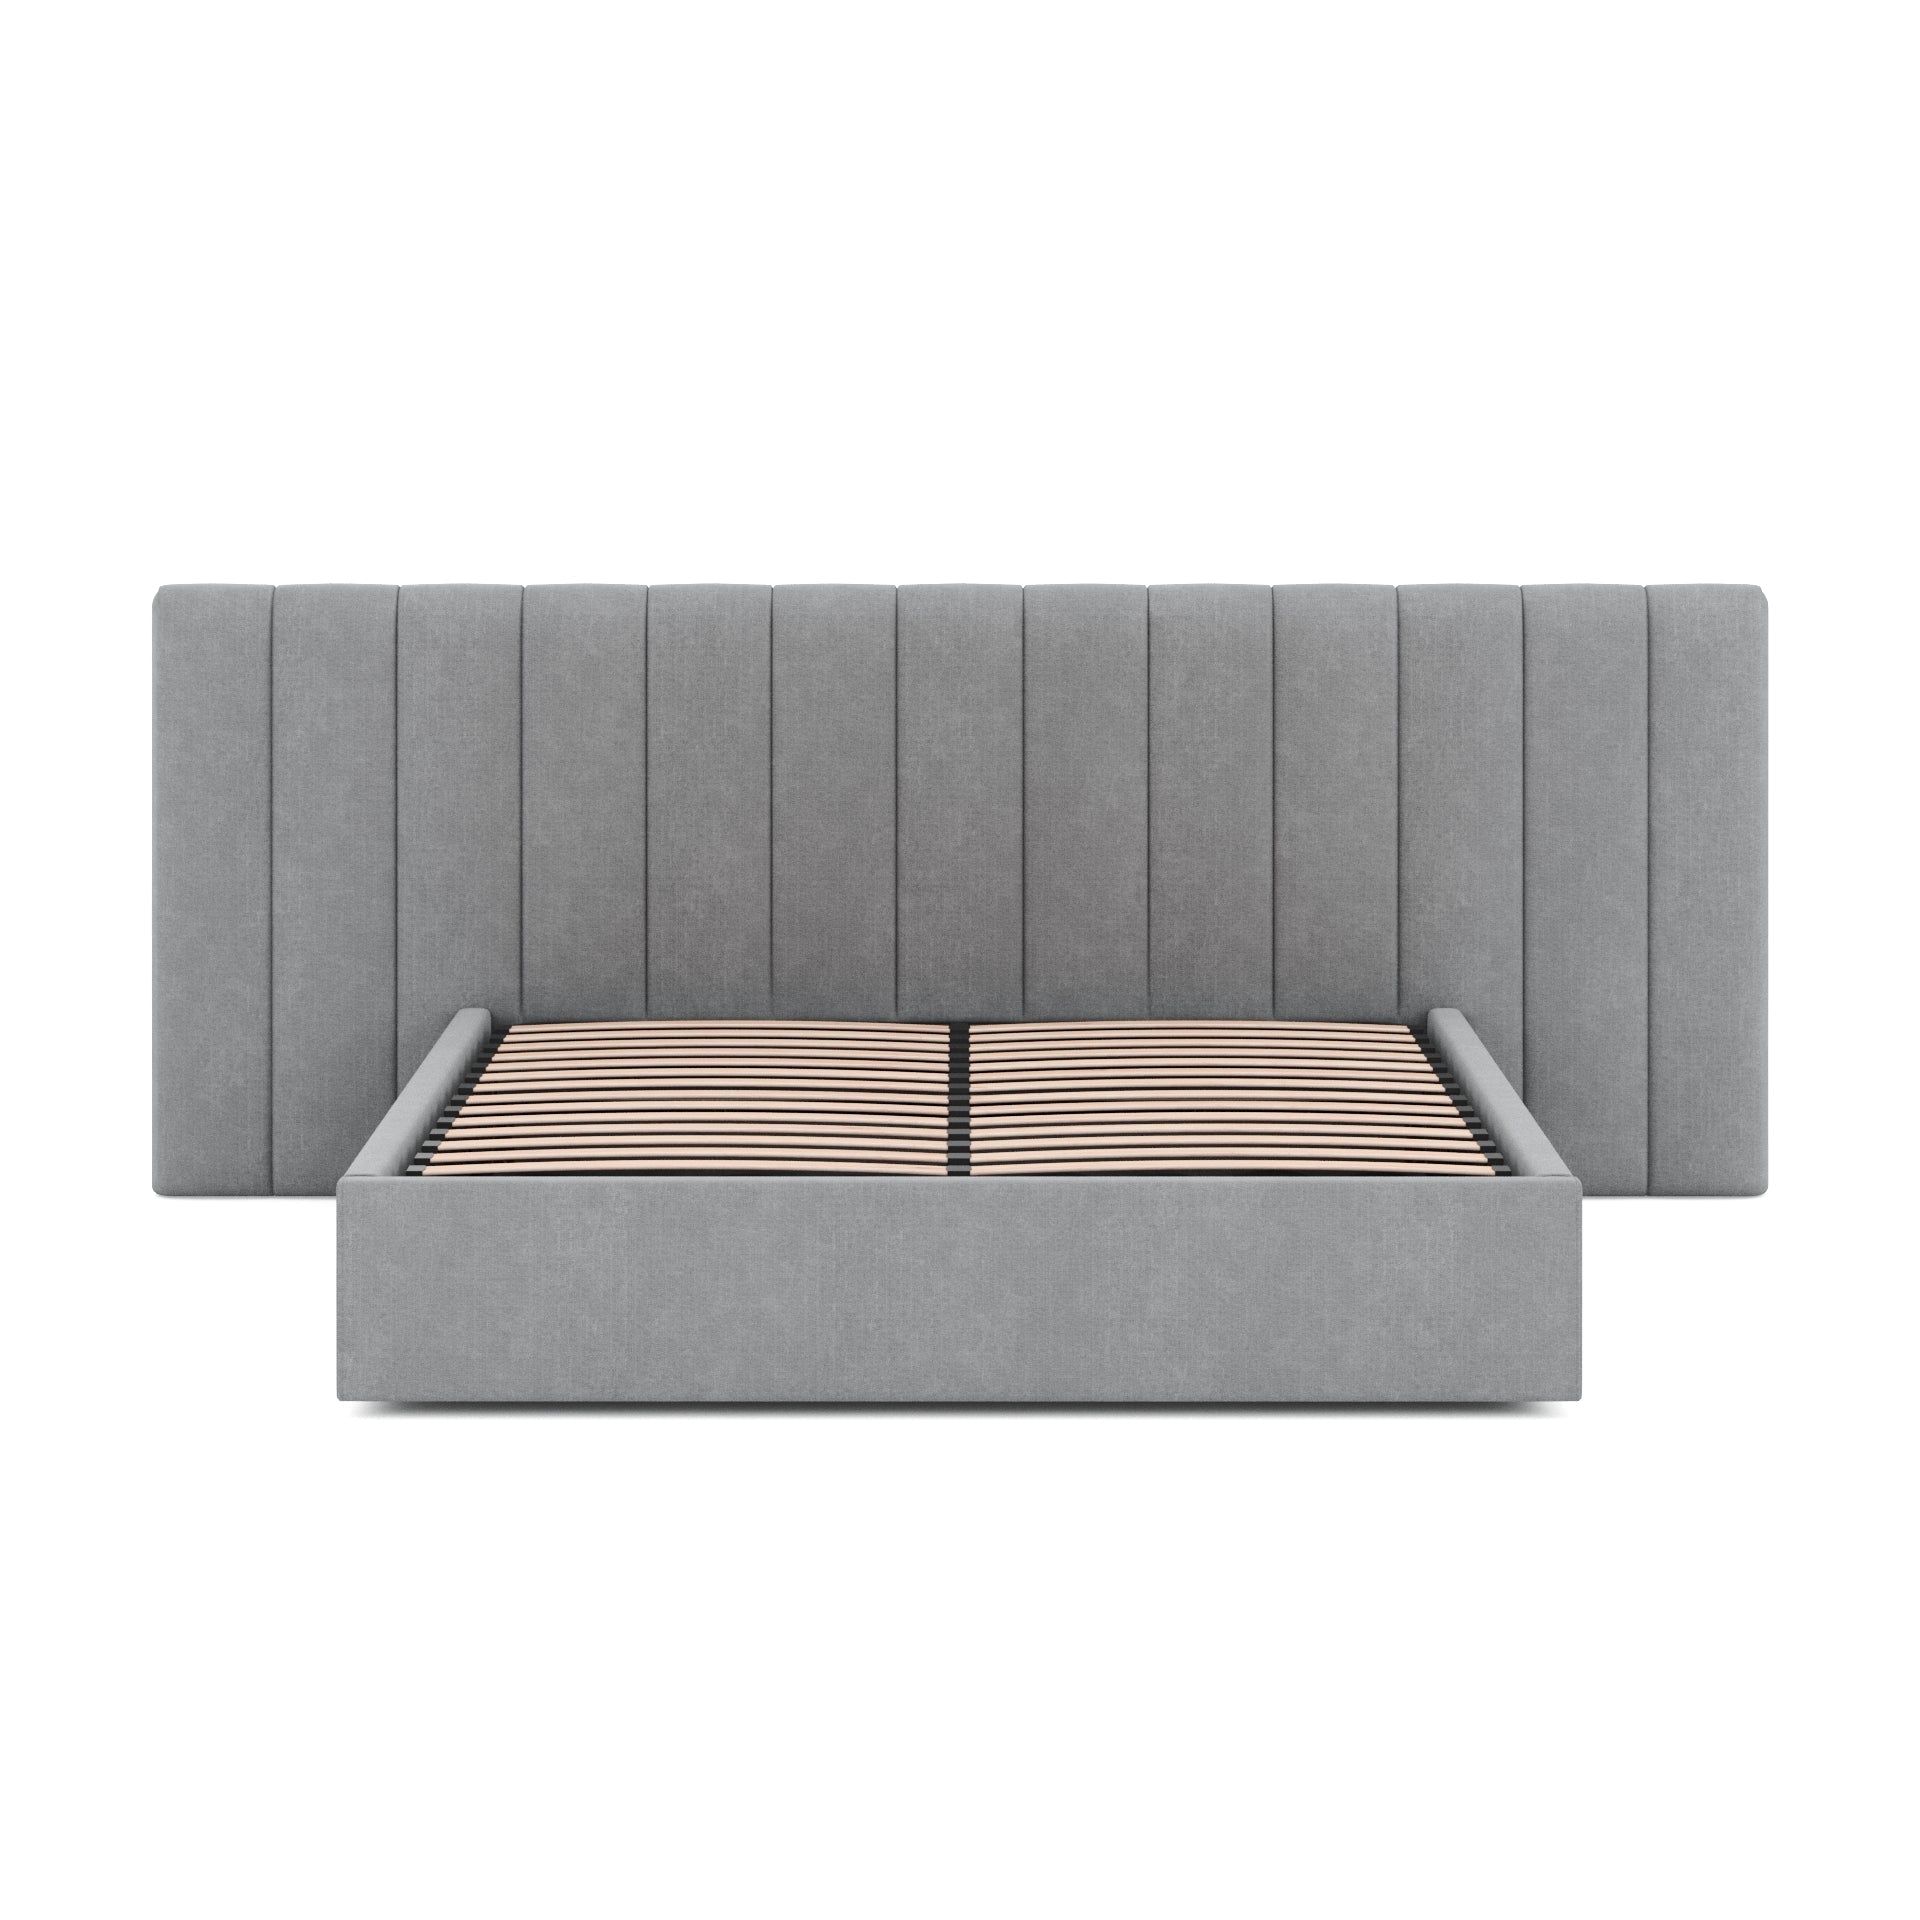 Ryan Wide Base King Sized Bed Frame - Flint Grey - Beds